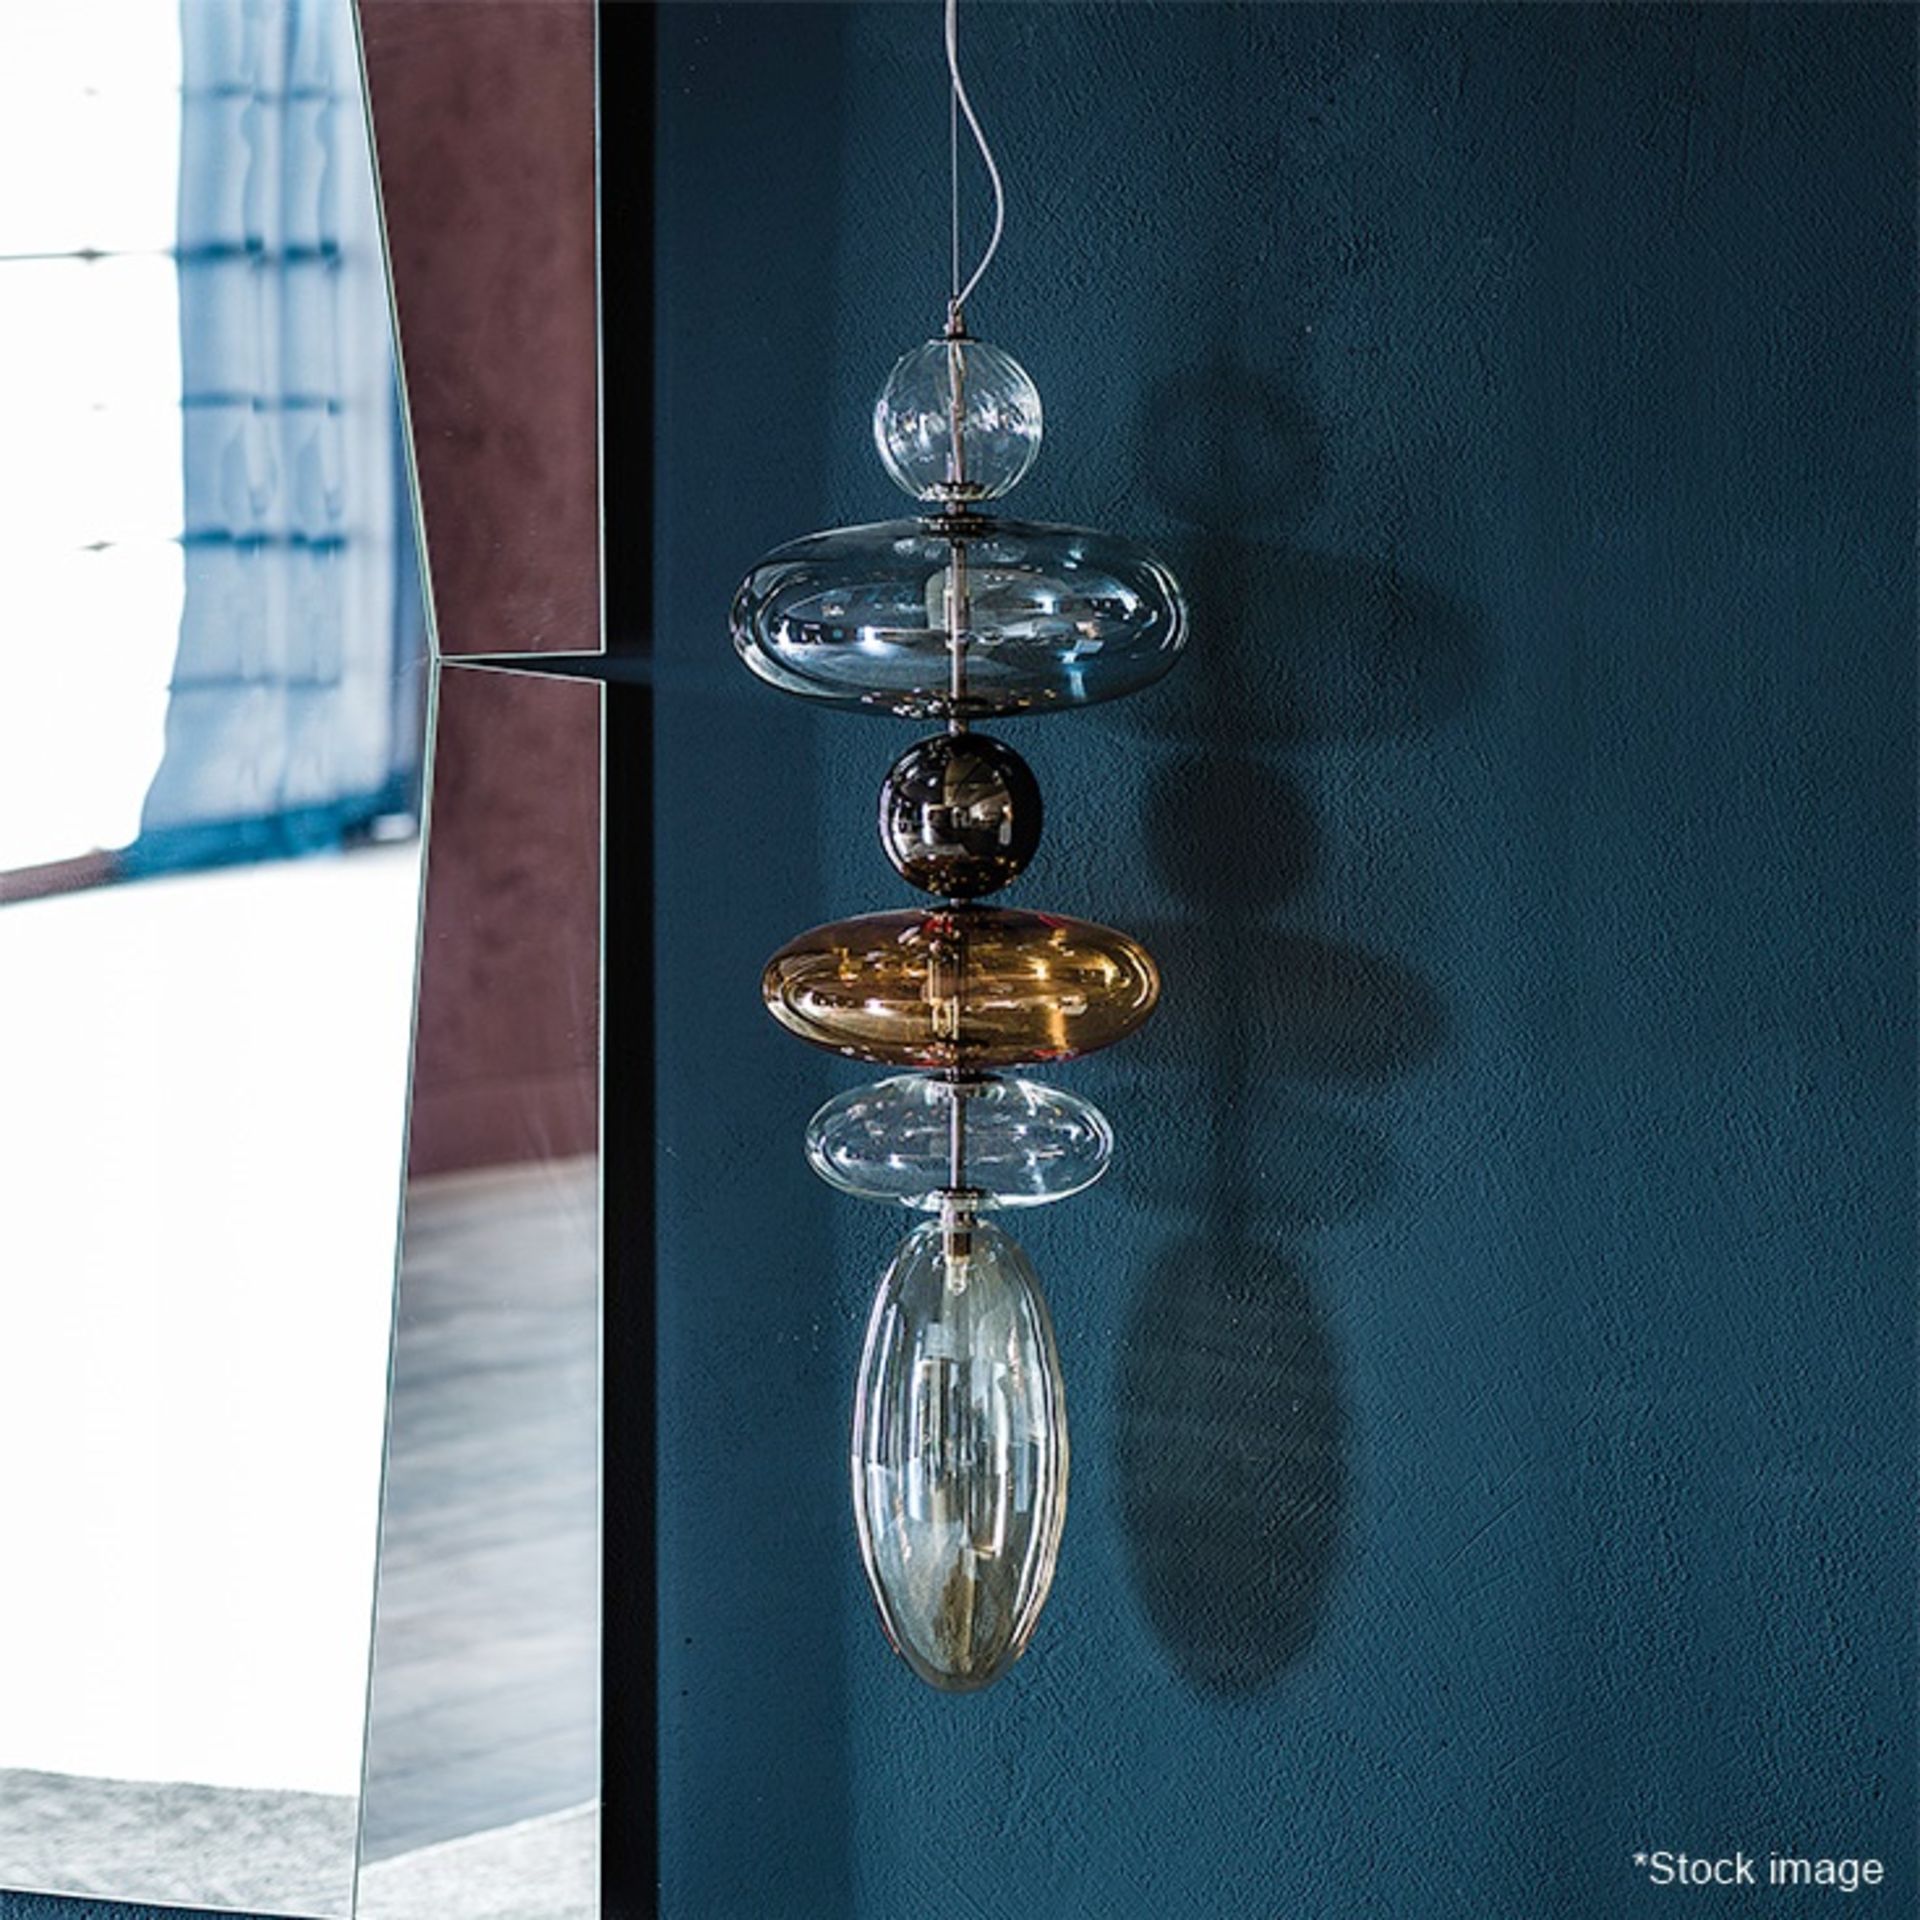 1 x CATTELAN ITALIA 'Baban' Designer Smoked Glass Pendant Chandelier Light - Original Price £2,638 - Image 3 of 11